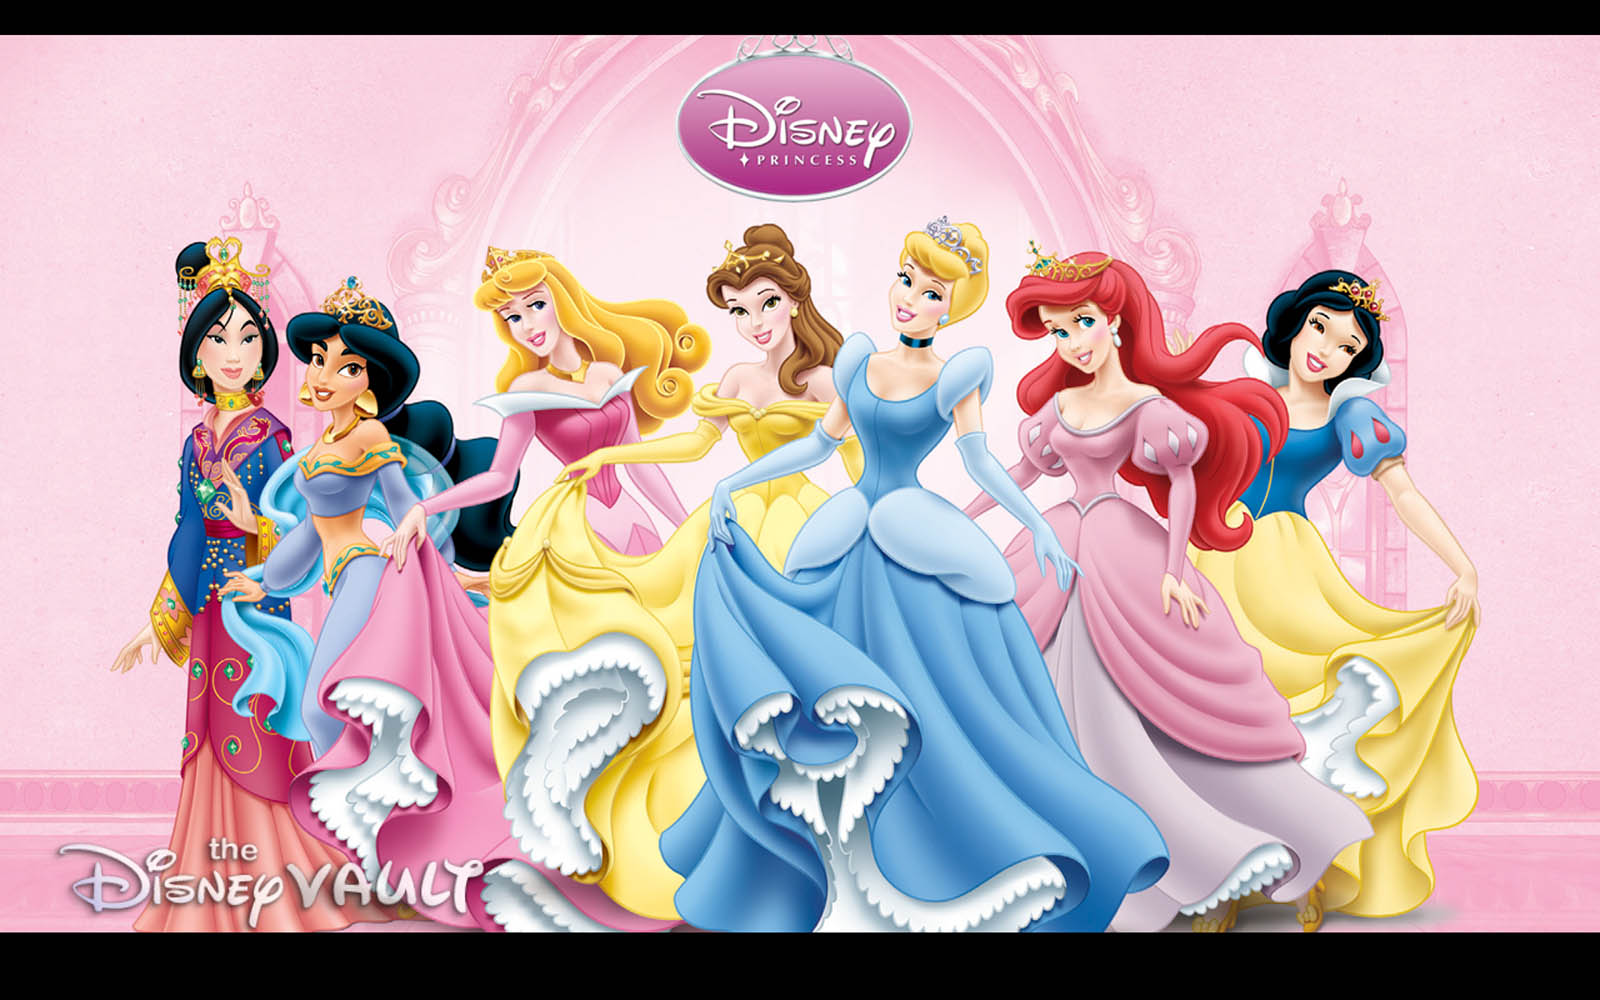 Tag Disney Princess Wallpaper Background Photos Image And